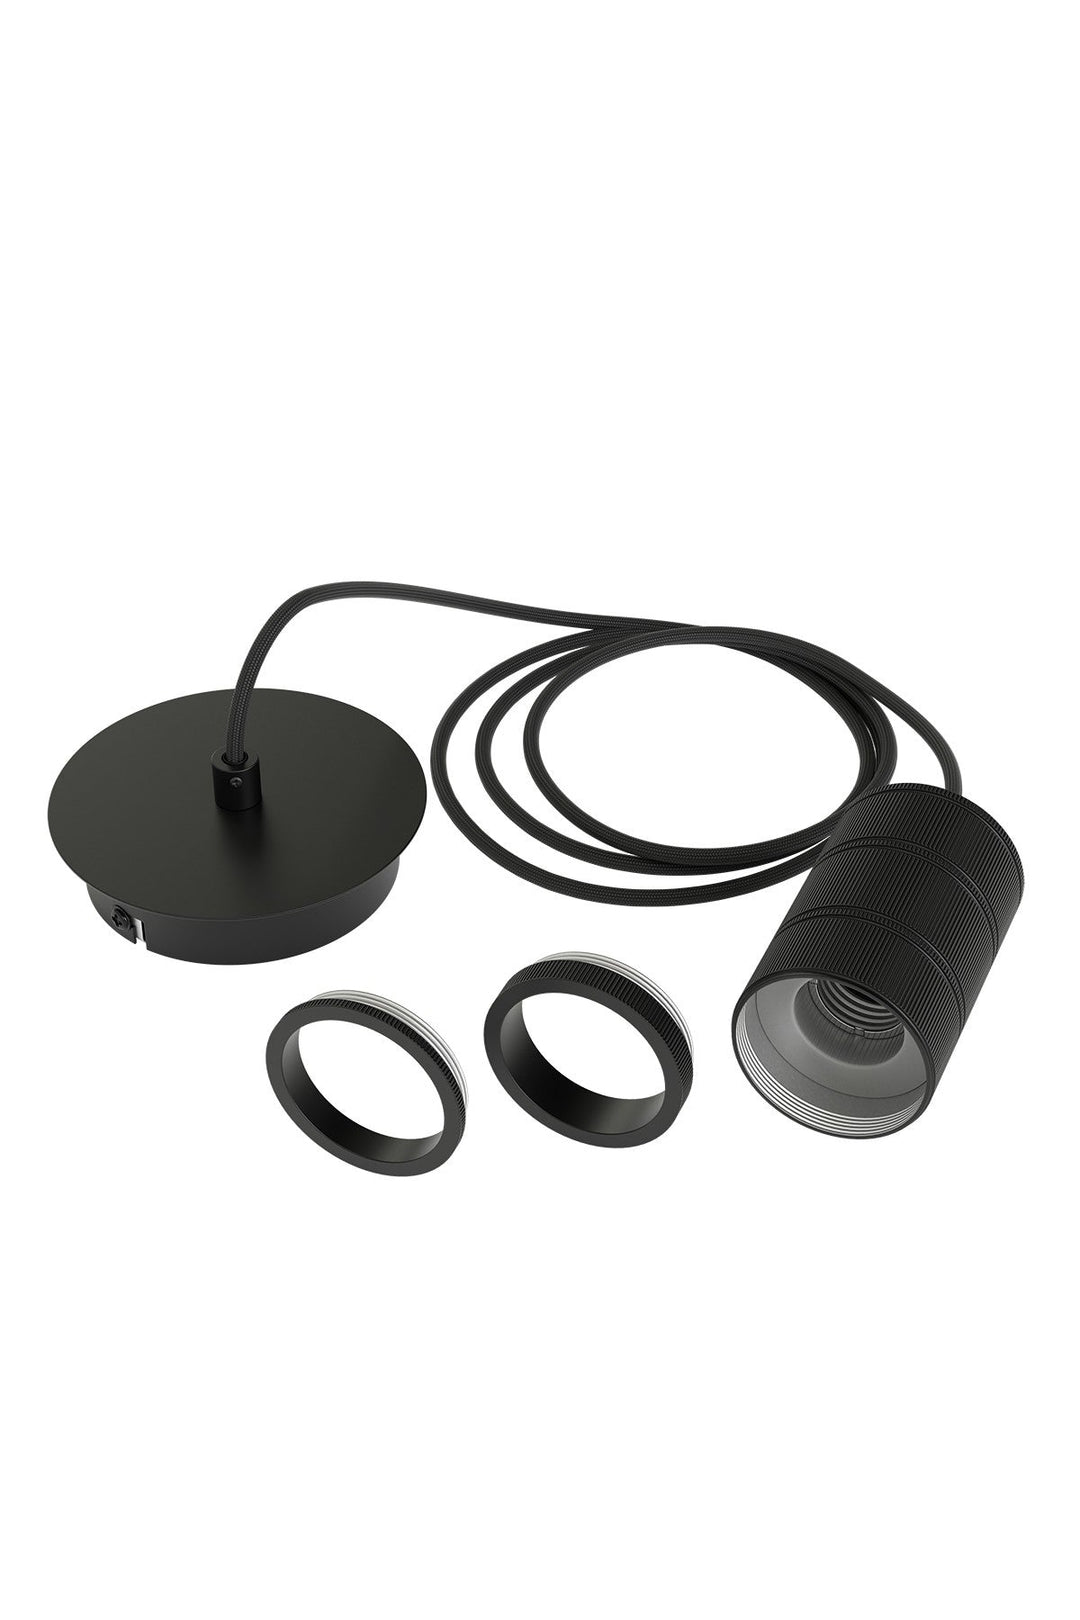 Calex Single Pendant Cord Set Industrial Black - 965255